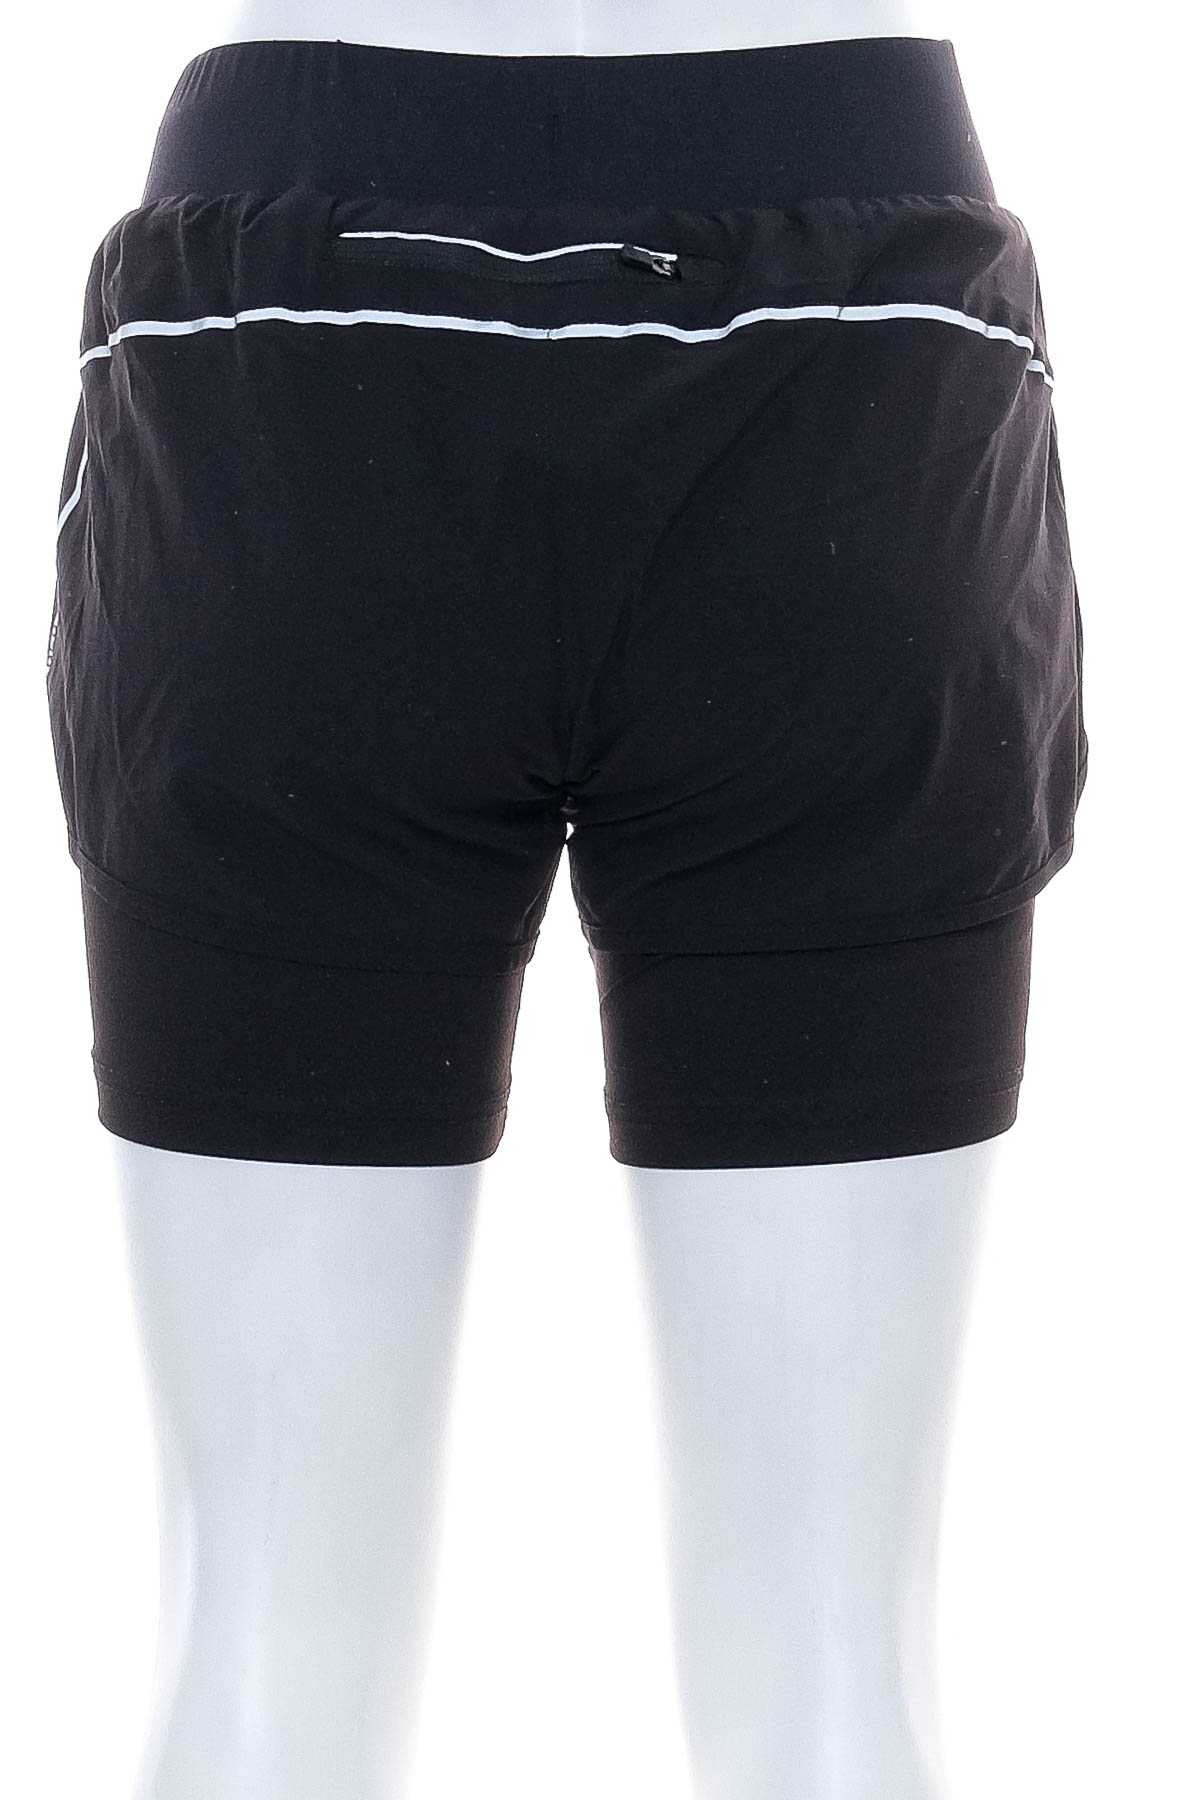 Women's shorts - Pro Touch - 1